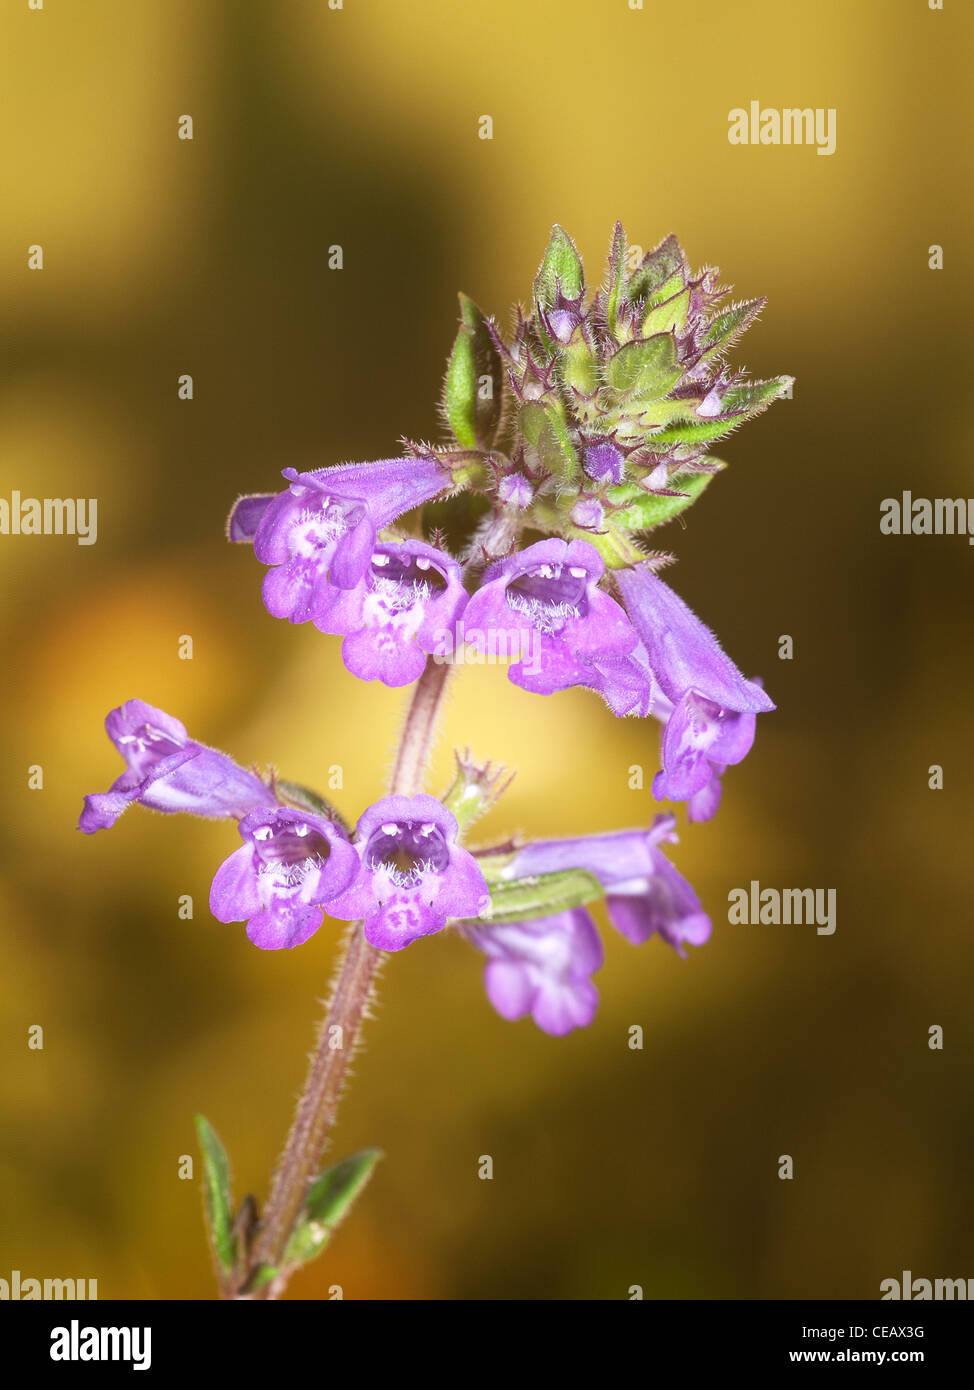 Wild Basil, Satureja vulgaris, vertical portrait of purple flowers with nice out focus background. Stock Photo